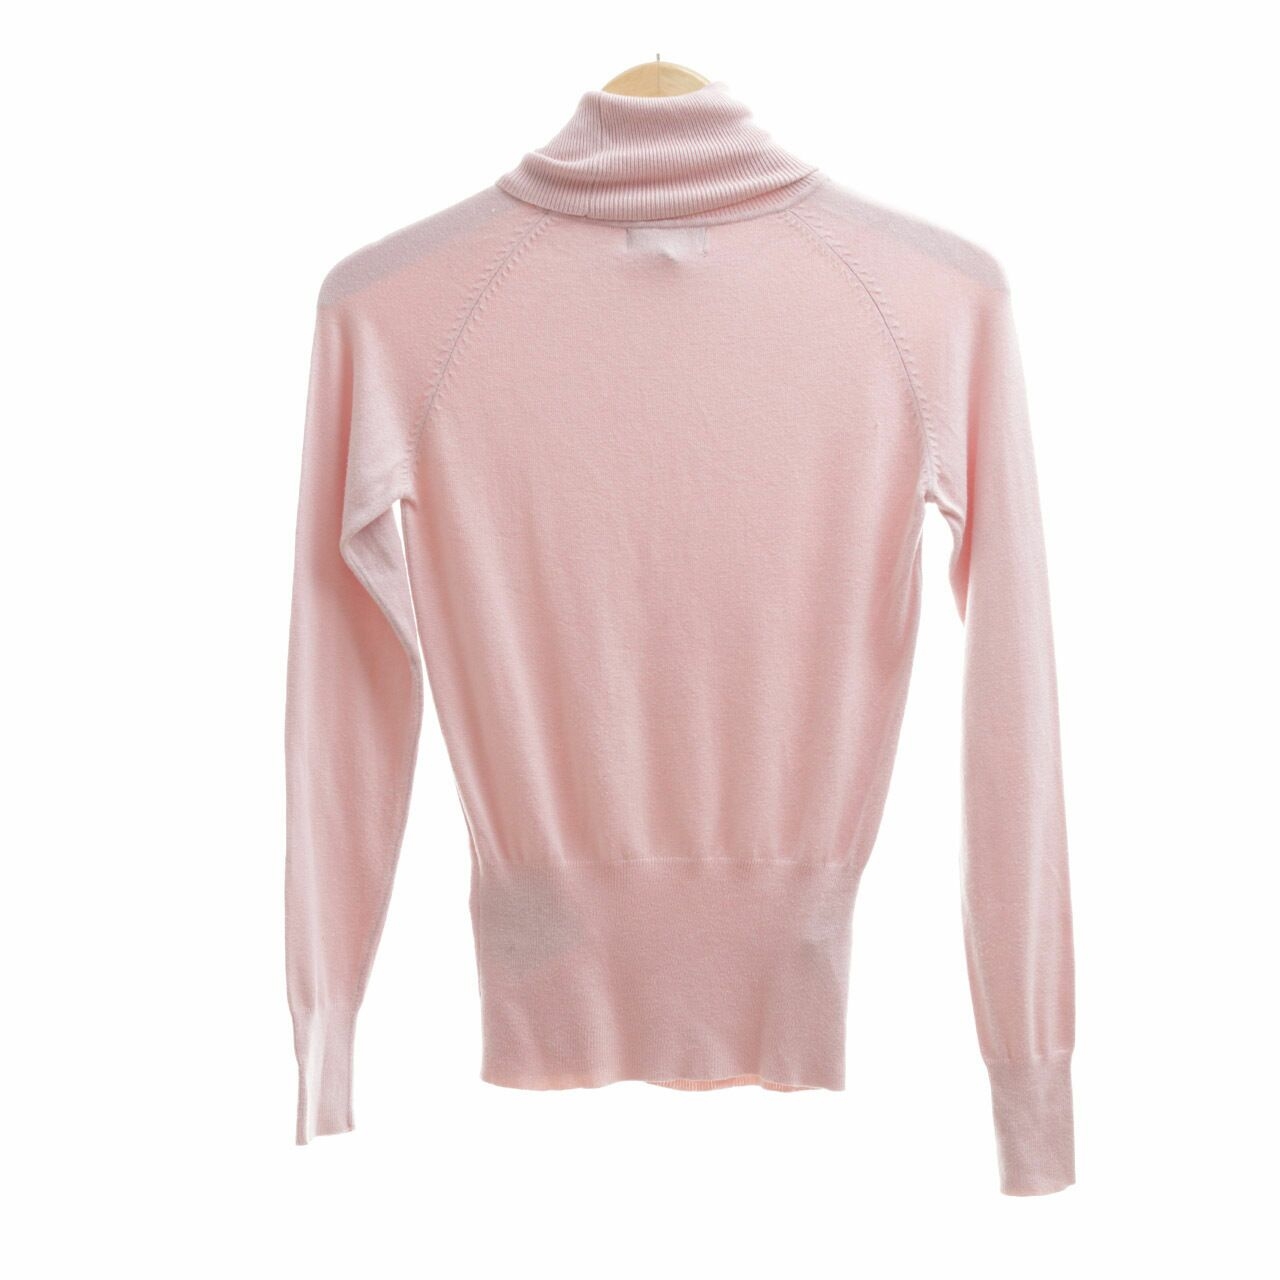 Mango Soft Pink Turtle Neck Sweater